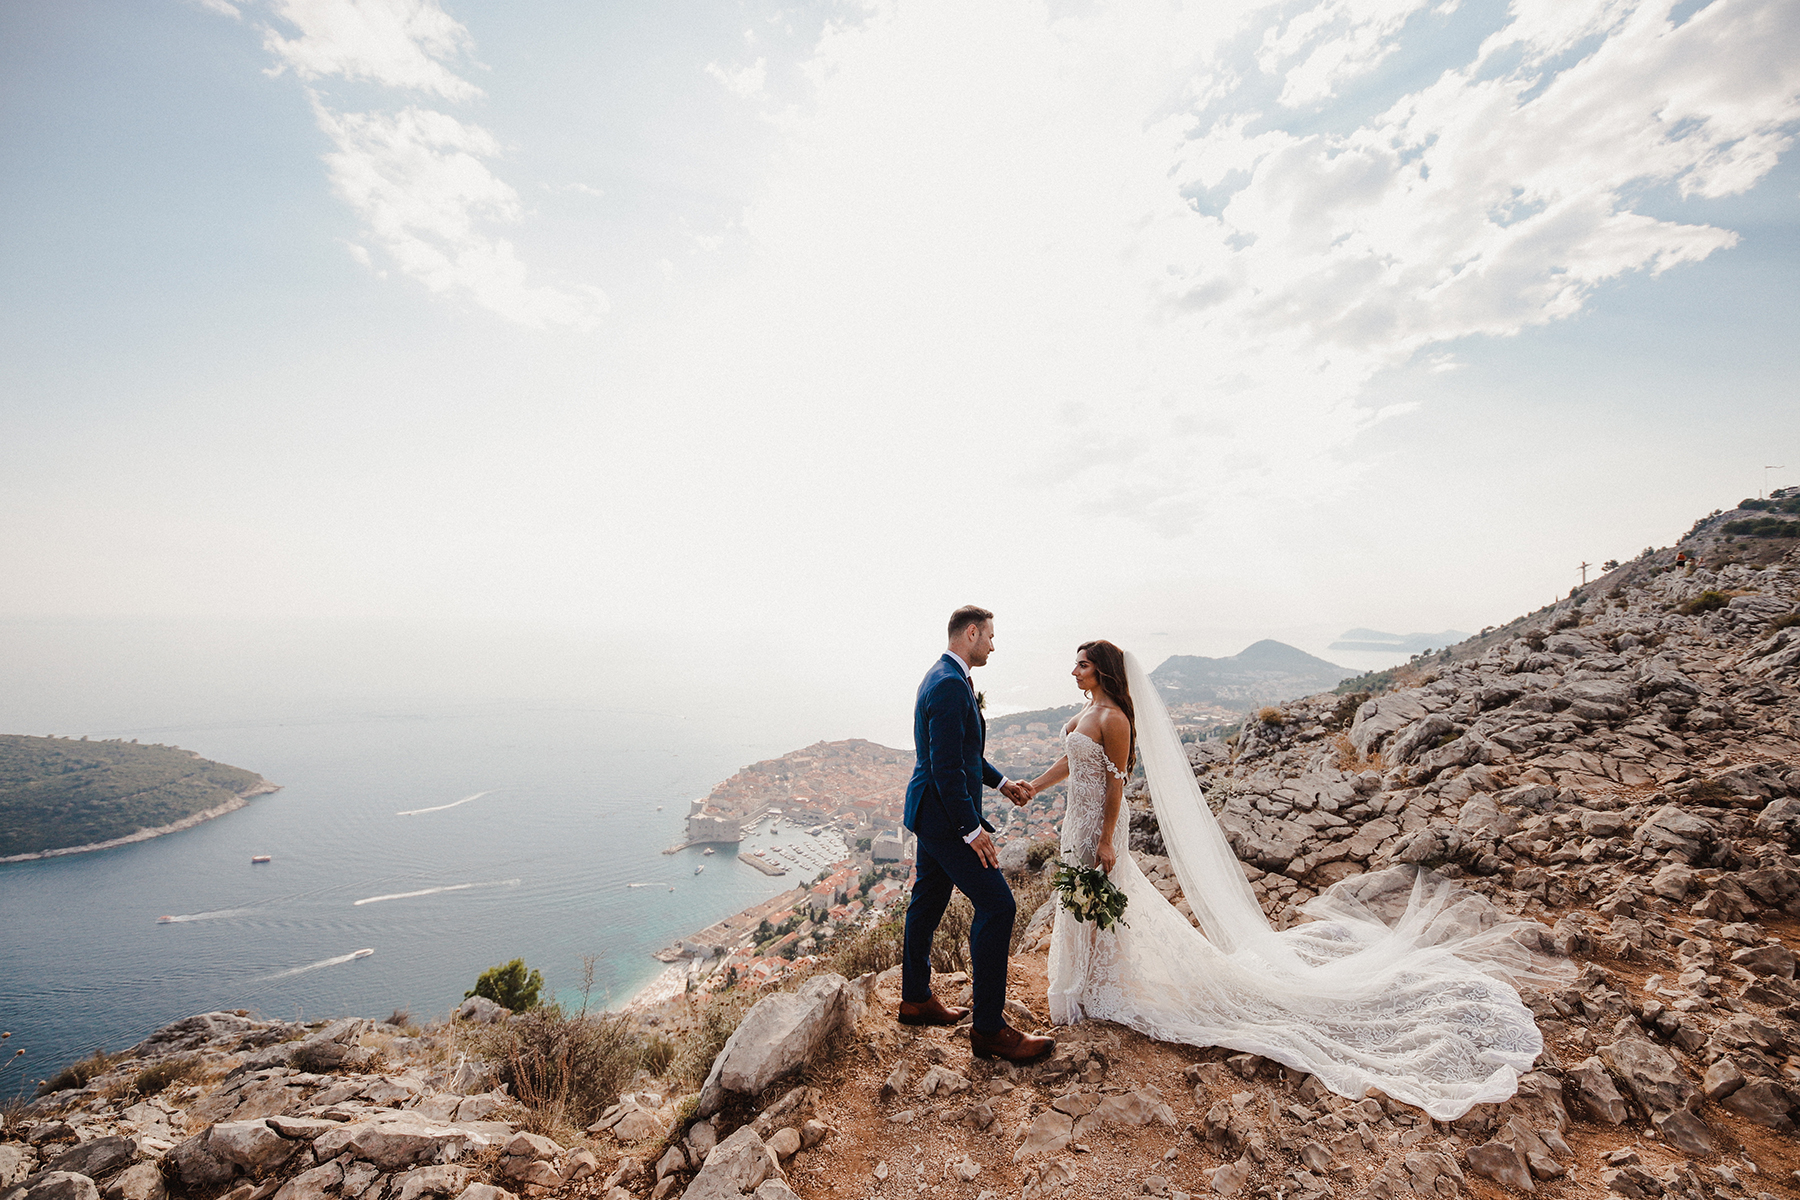 Dubrovnik Wedding Photography & Video, Croatia | MihociStudios